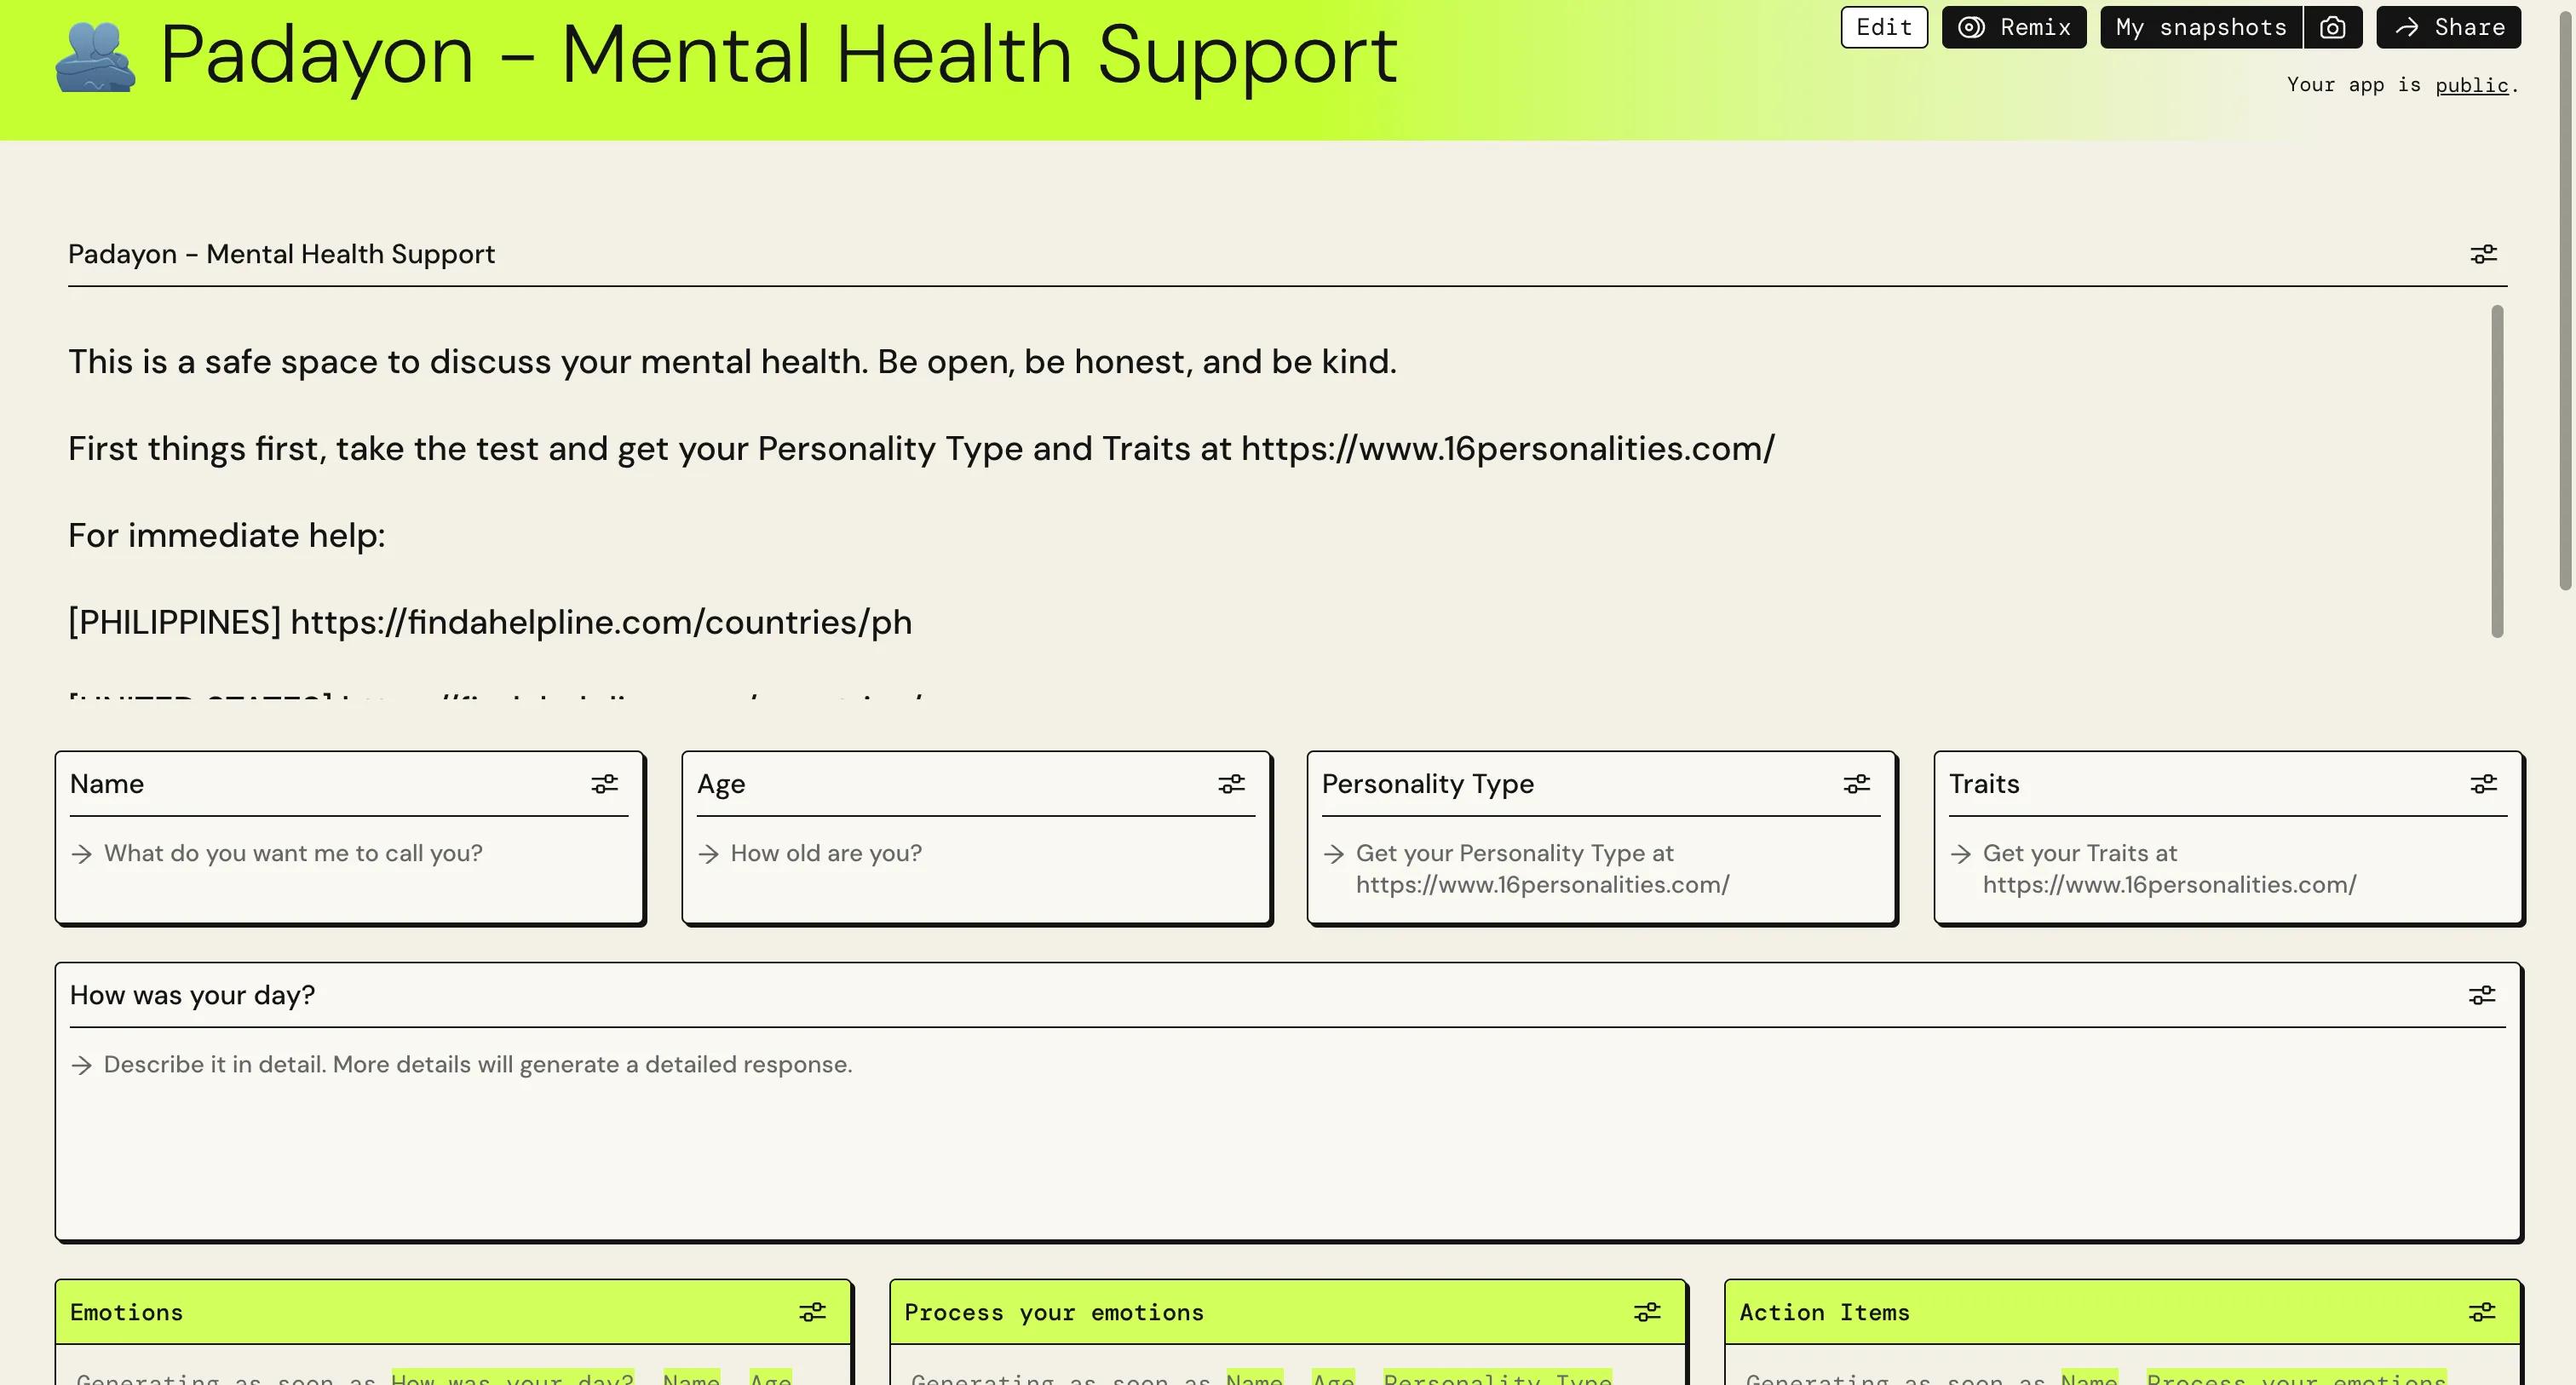 Padayon - Mental Health Support (Gen AI app)